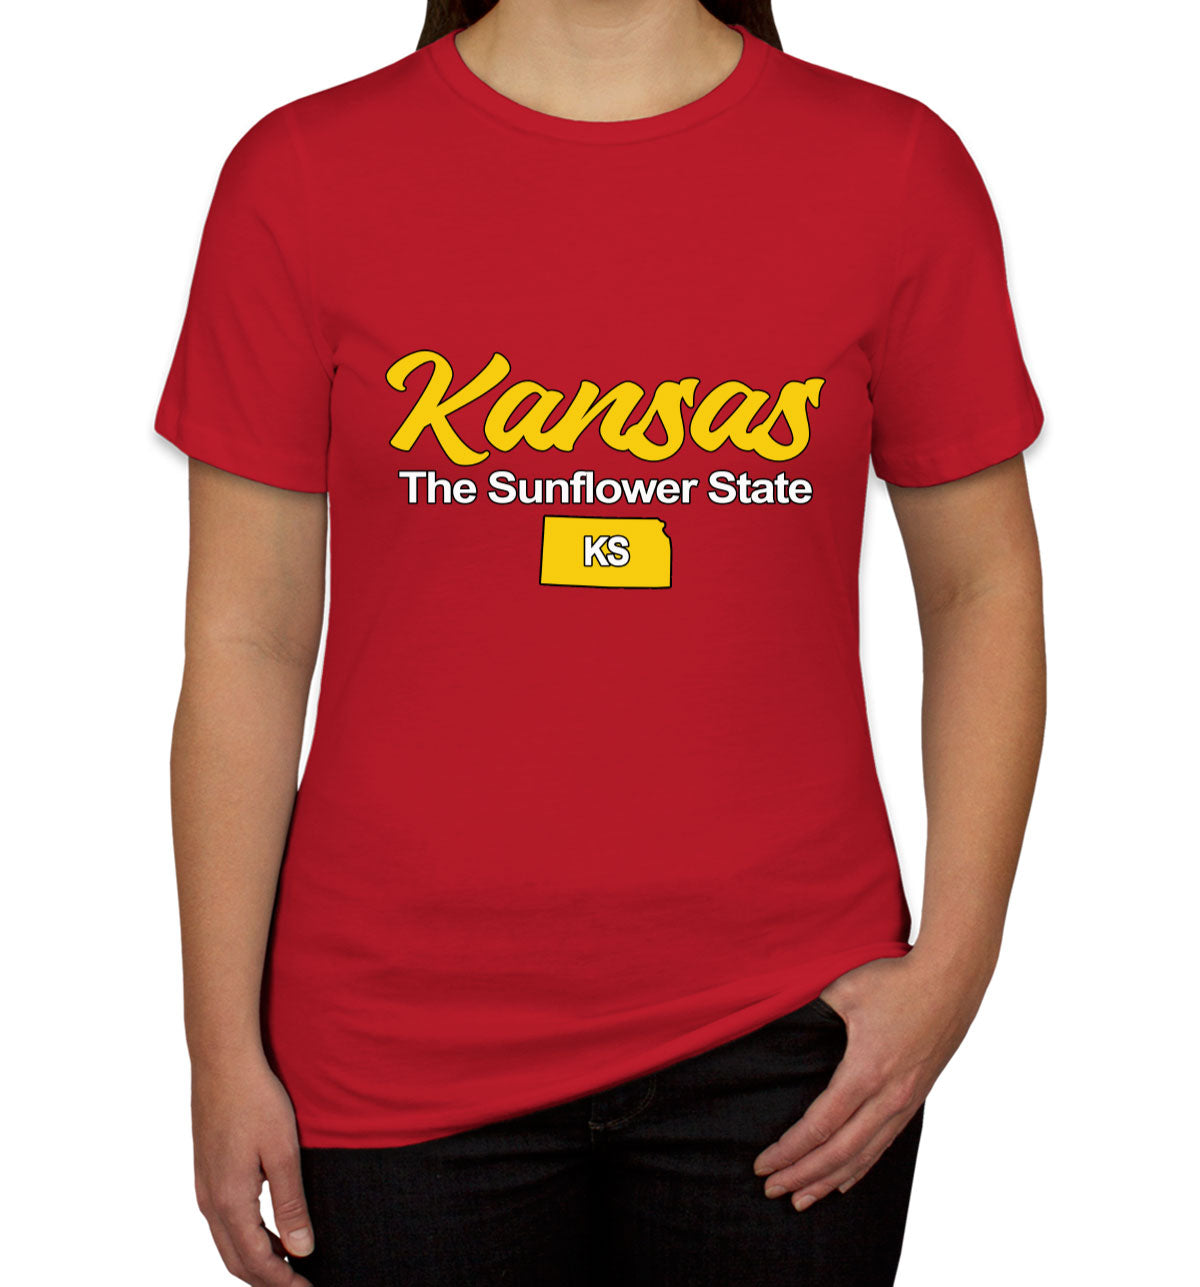 Kansas The Sunflower State Women's T-shirt